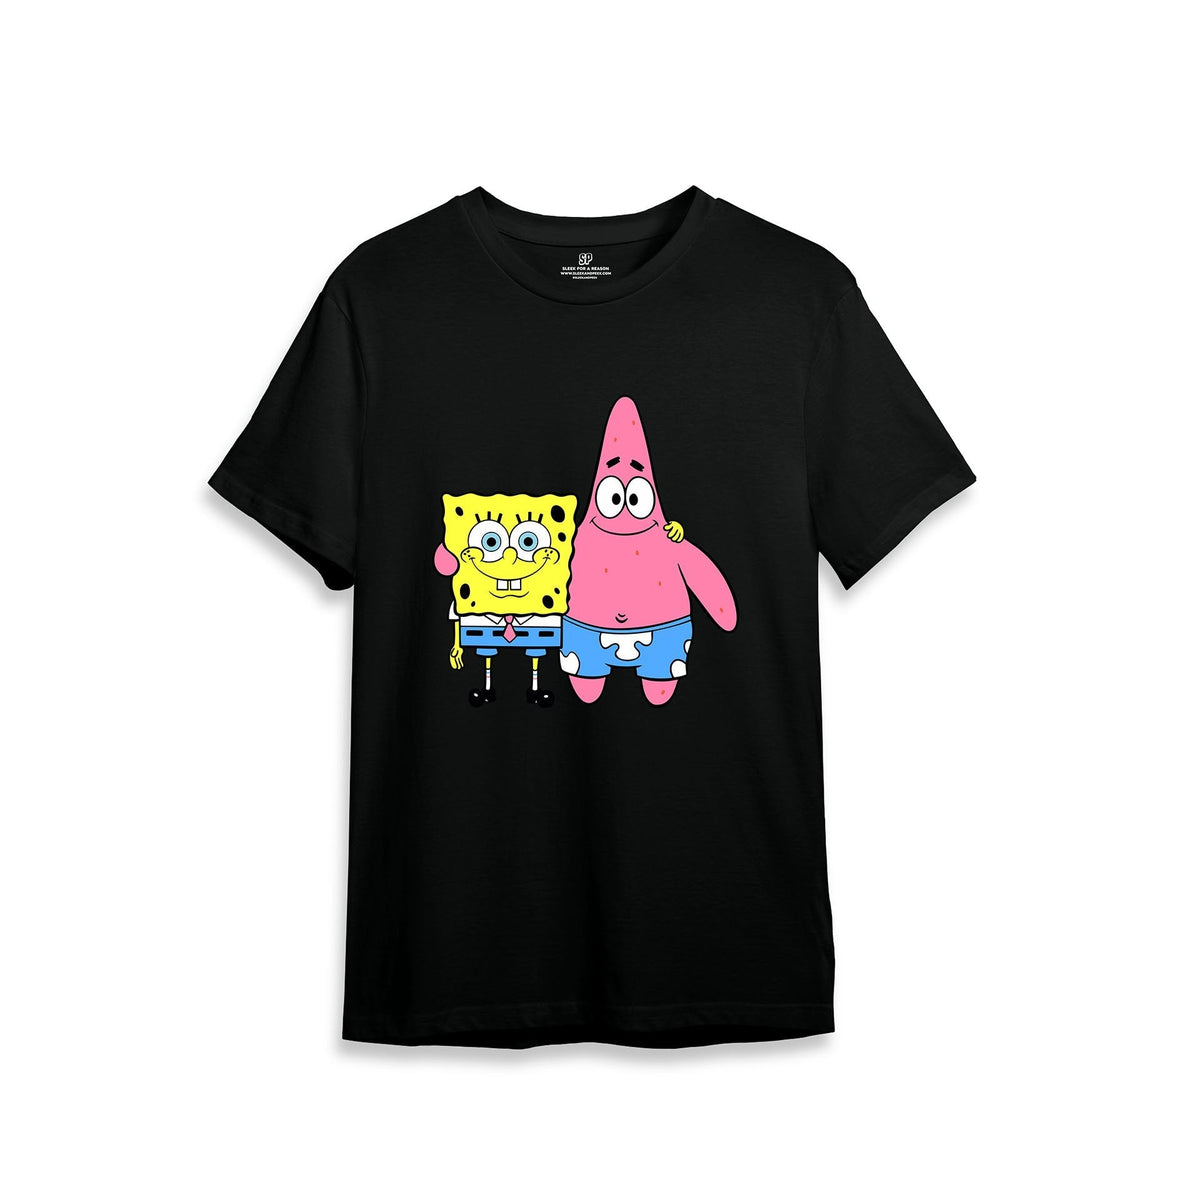 Sponge Bob With Patrick T-shirt - Sleek&Peek